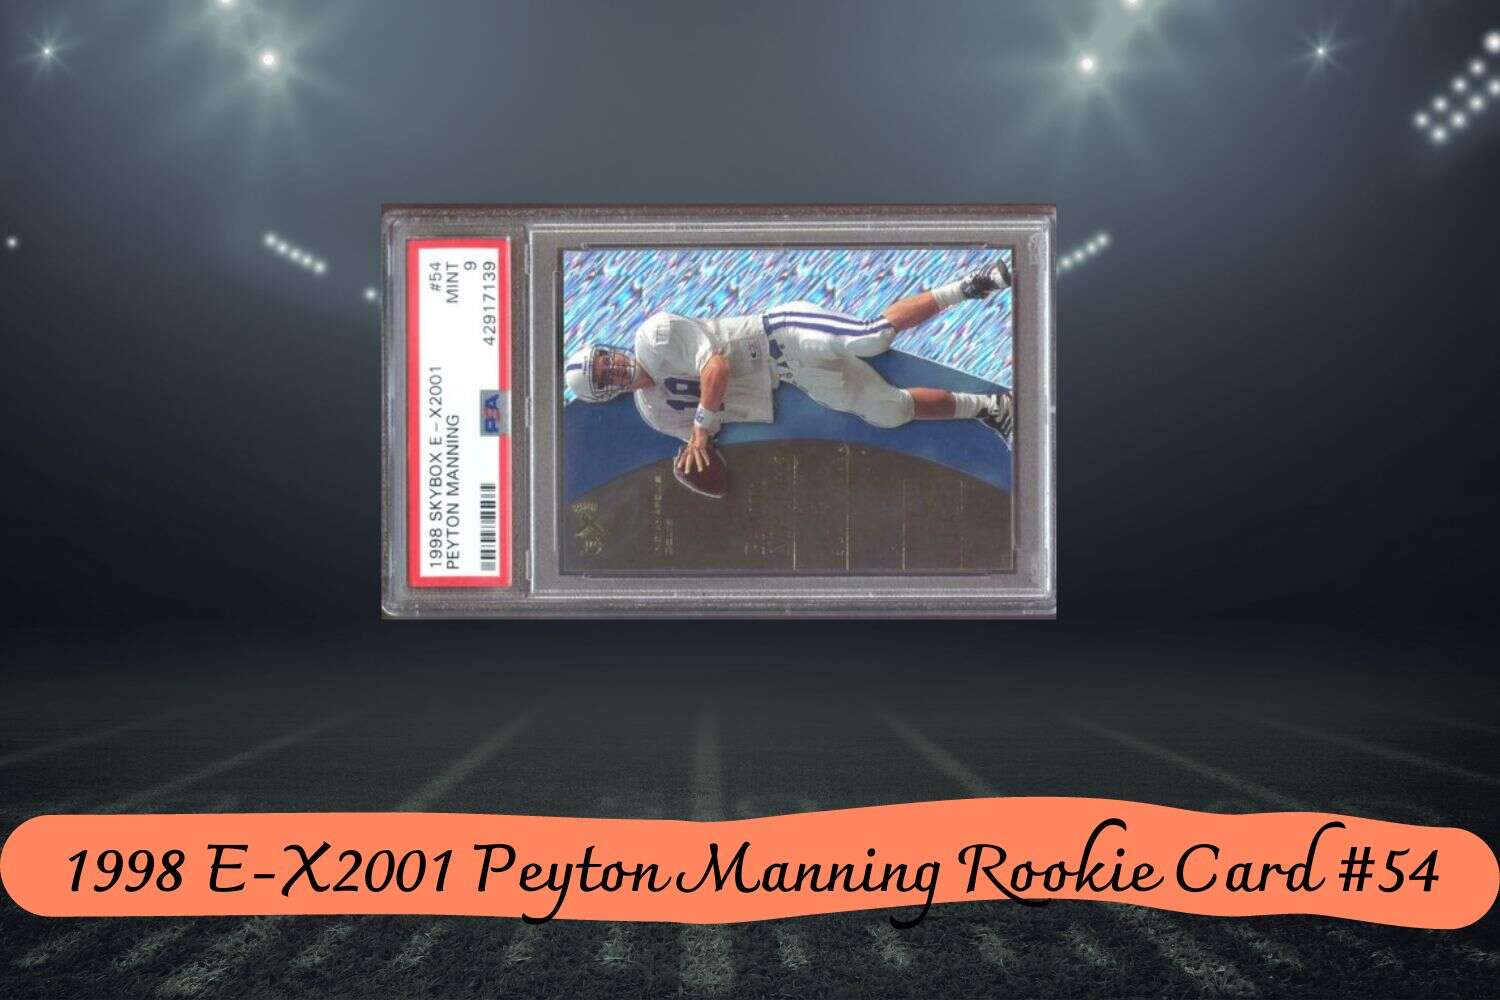 #11 1998 E-X2001 Peyton Manning Rookie Card #54 - Estimate value: $6,200